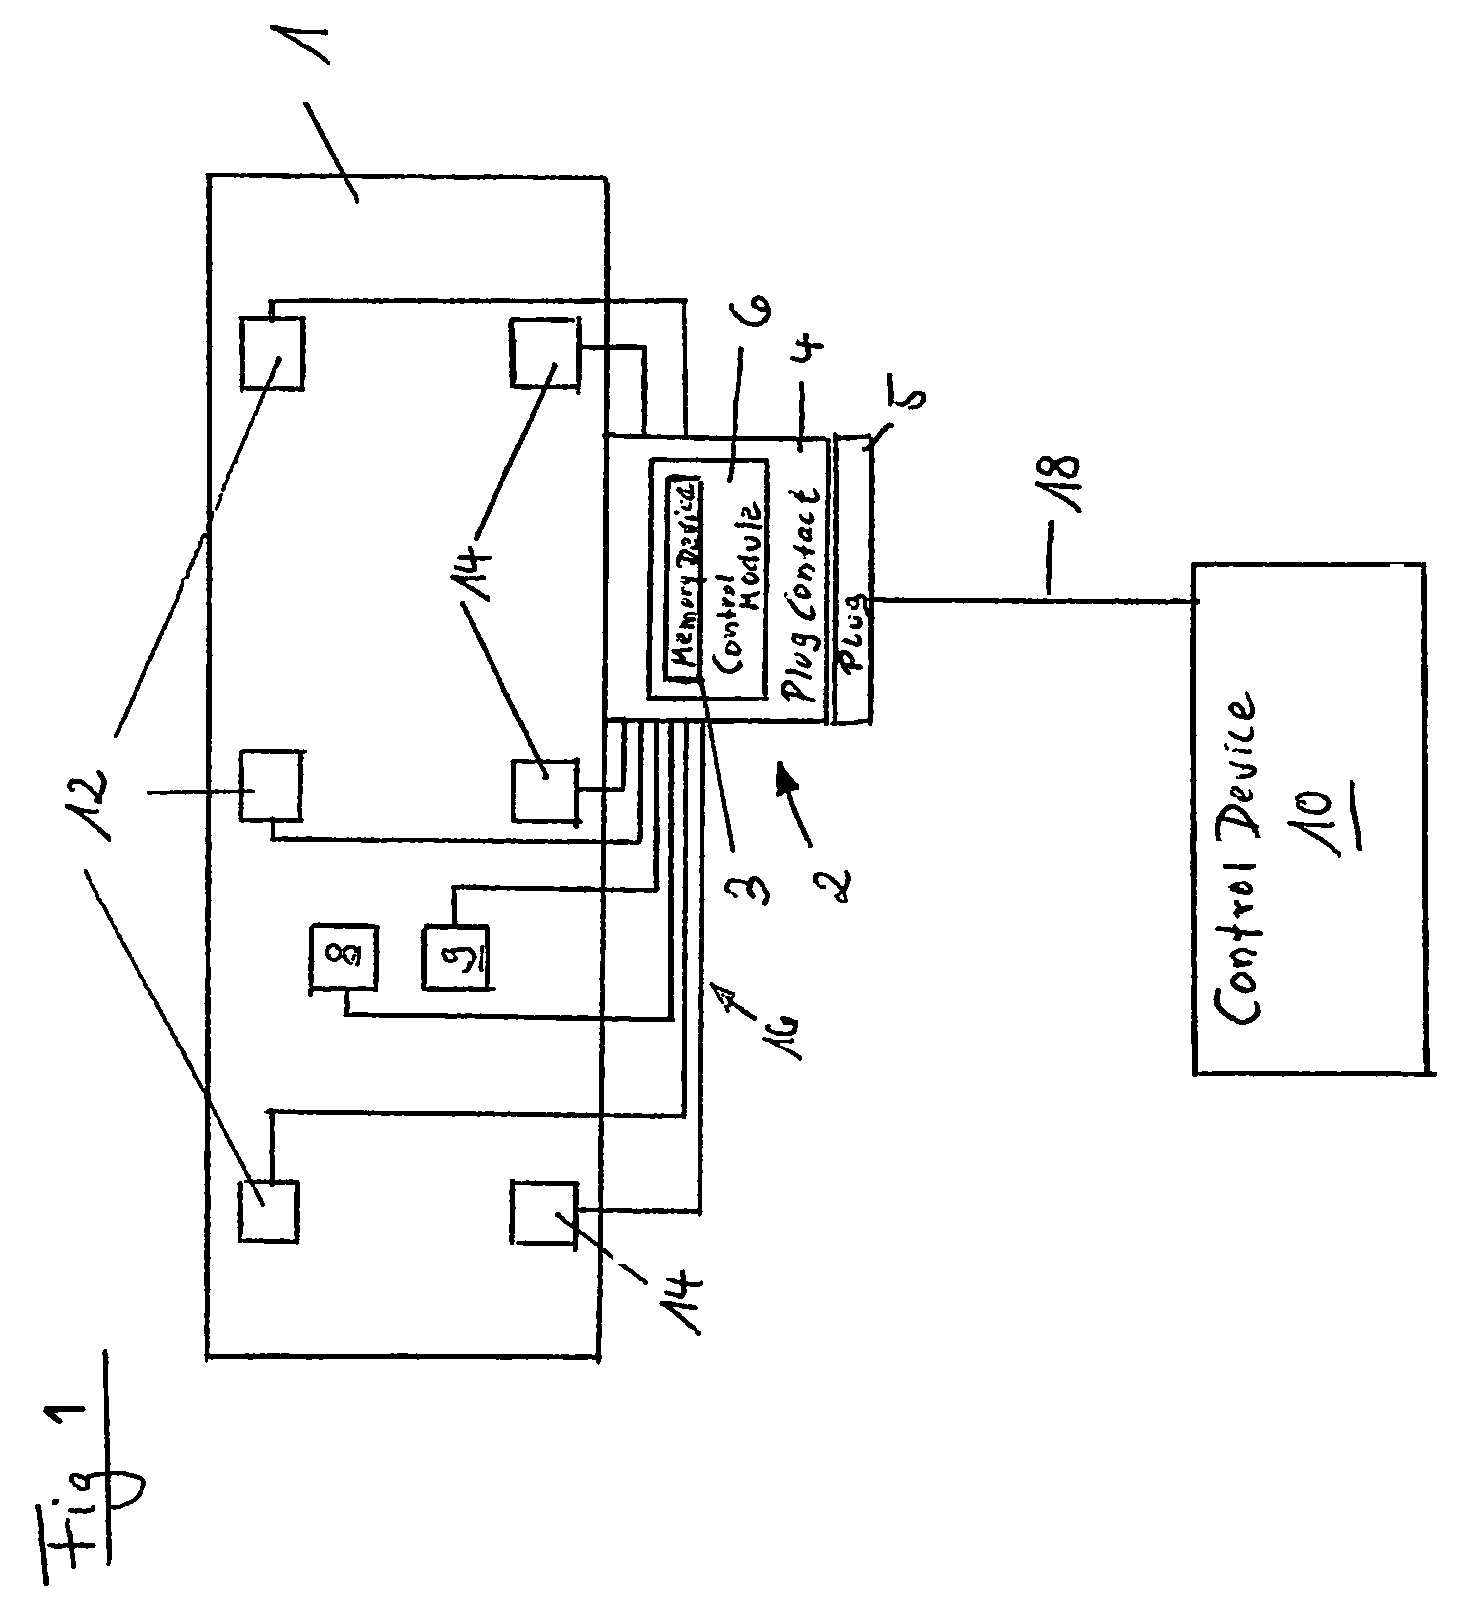 Identification of a modular machine component